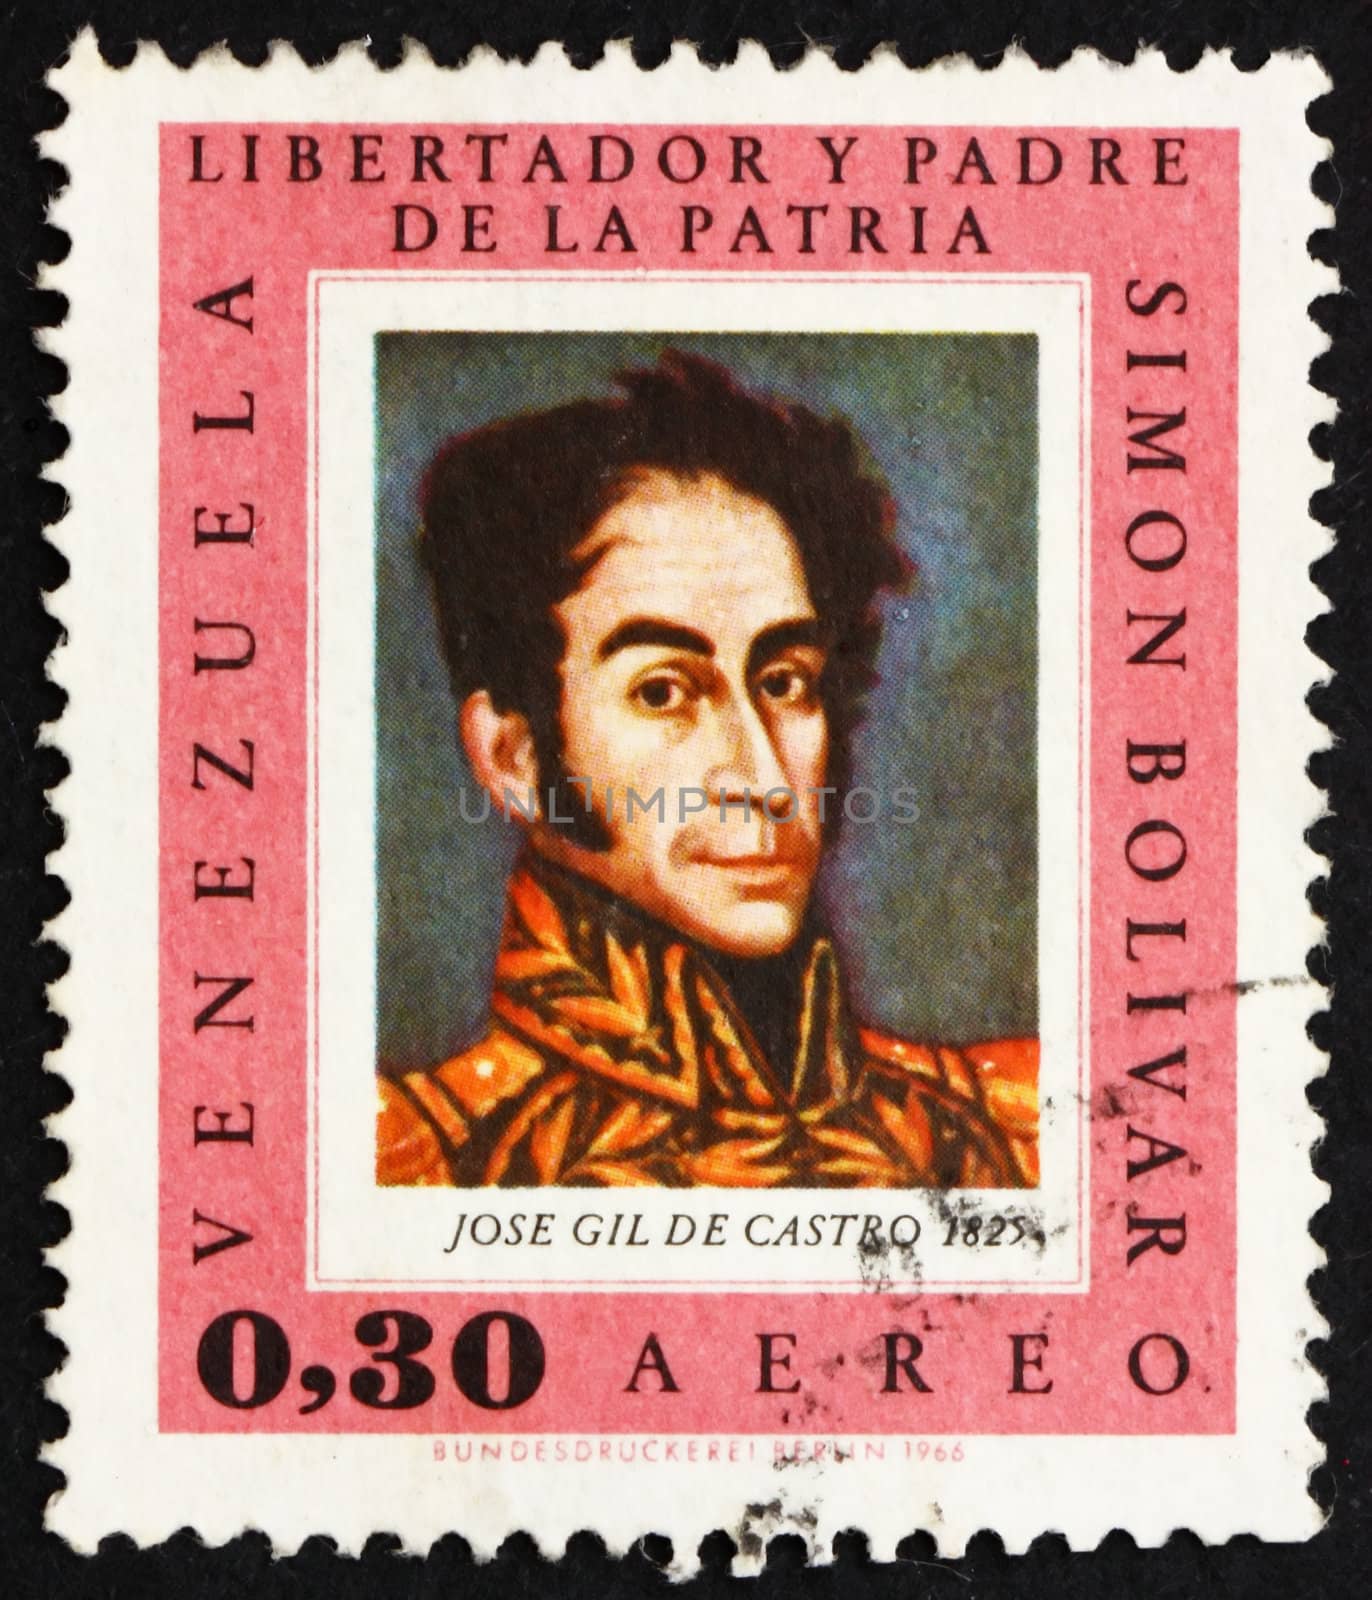 VENEZUELA - CIRCA 1966: a stamp printed in the Venezuela shows Simon Bolivar, Liberator, Revolutionary, Portrait, 2nd President of Venezuela, 1813 - 1814, circa 1966